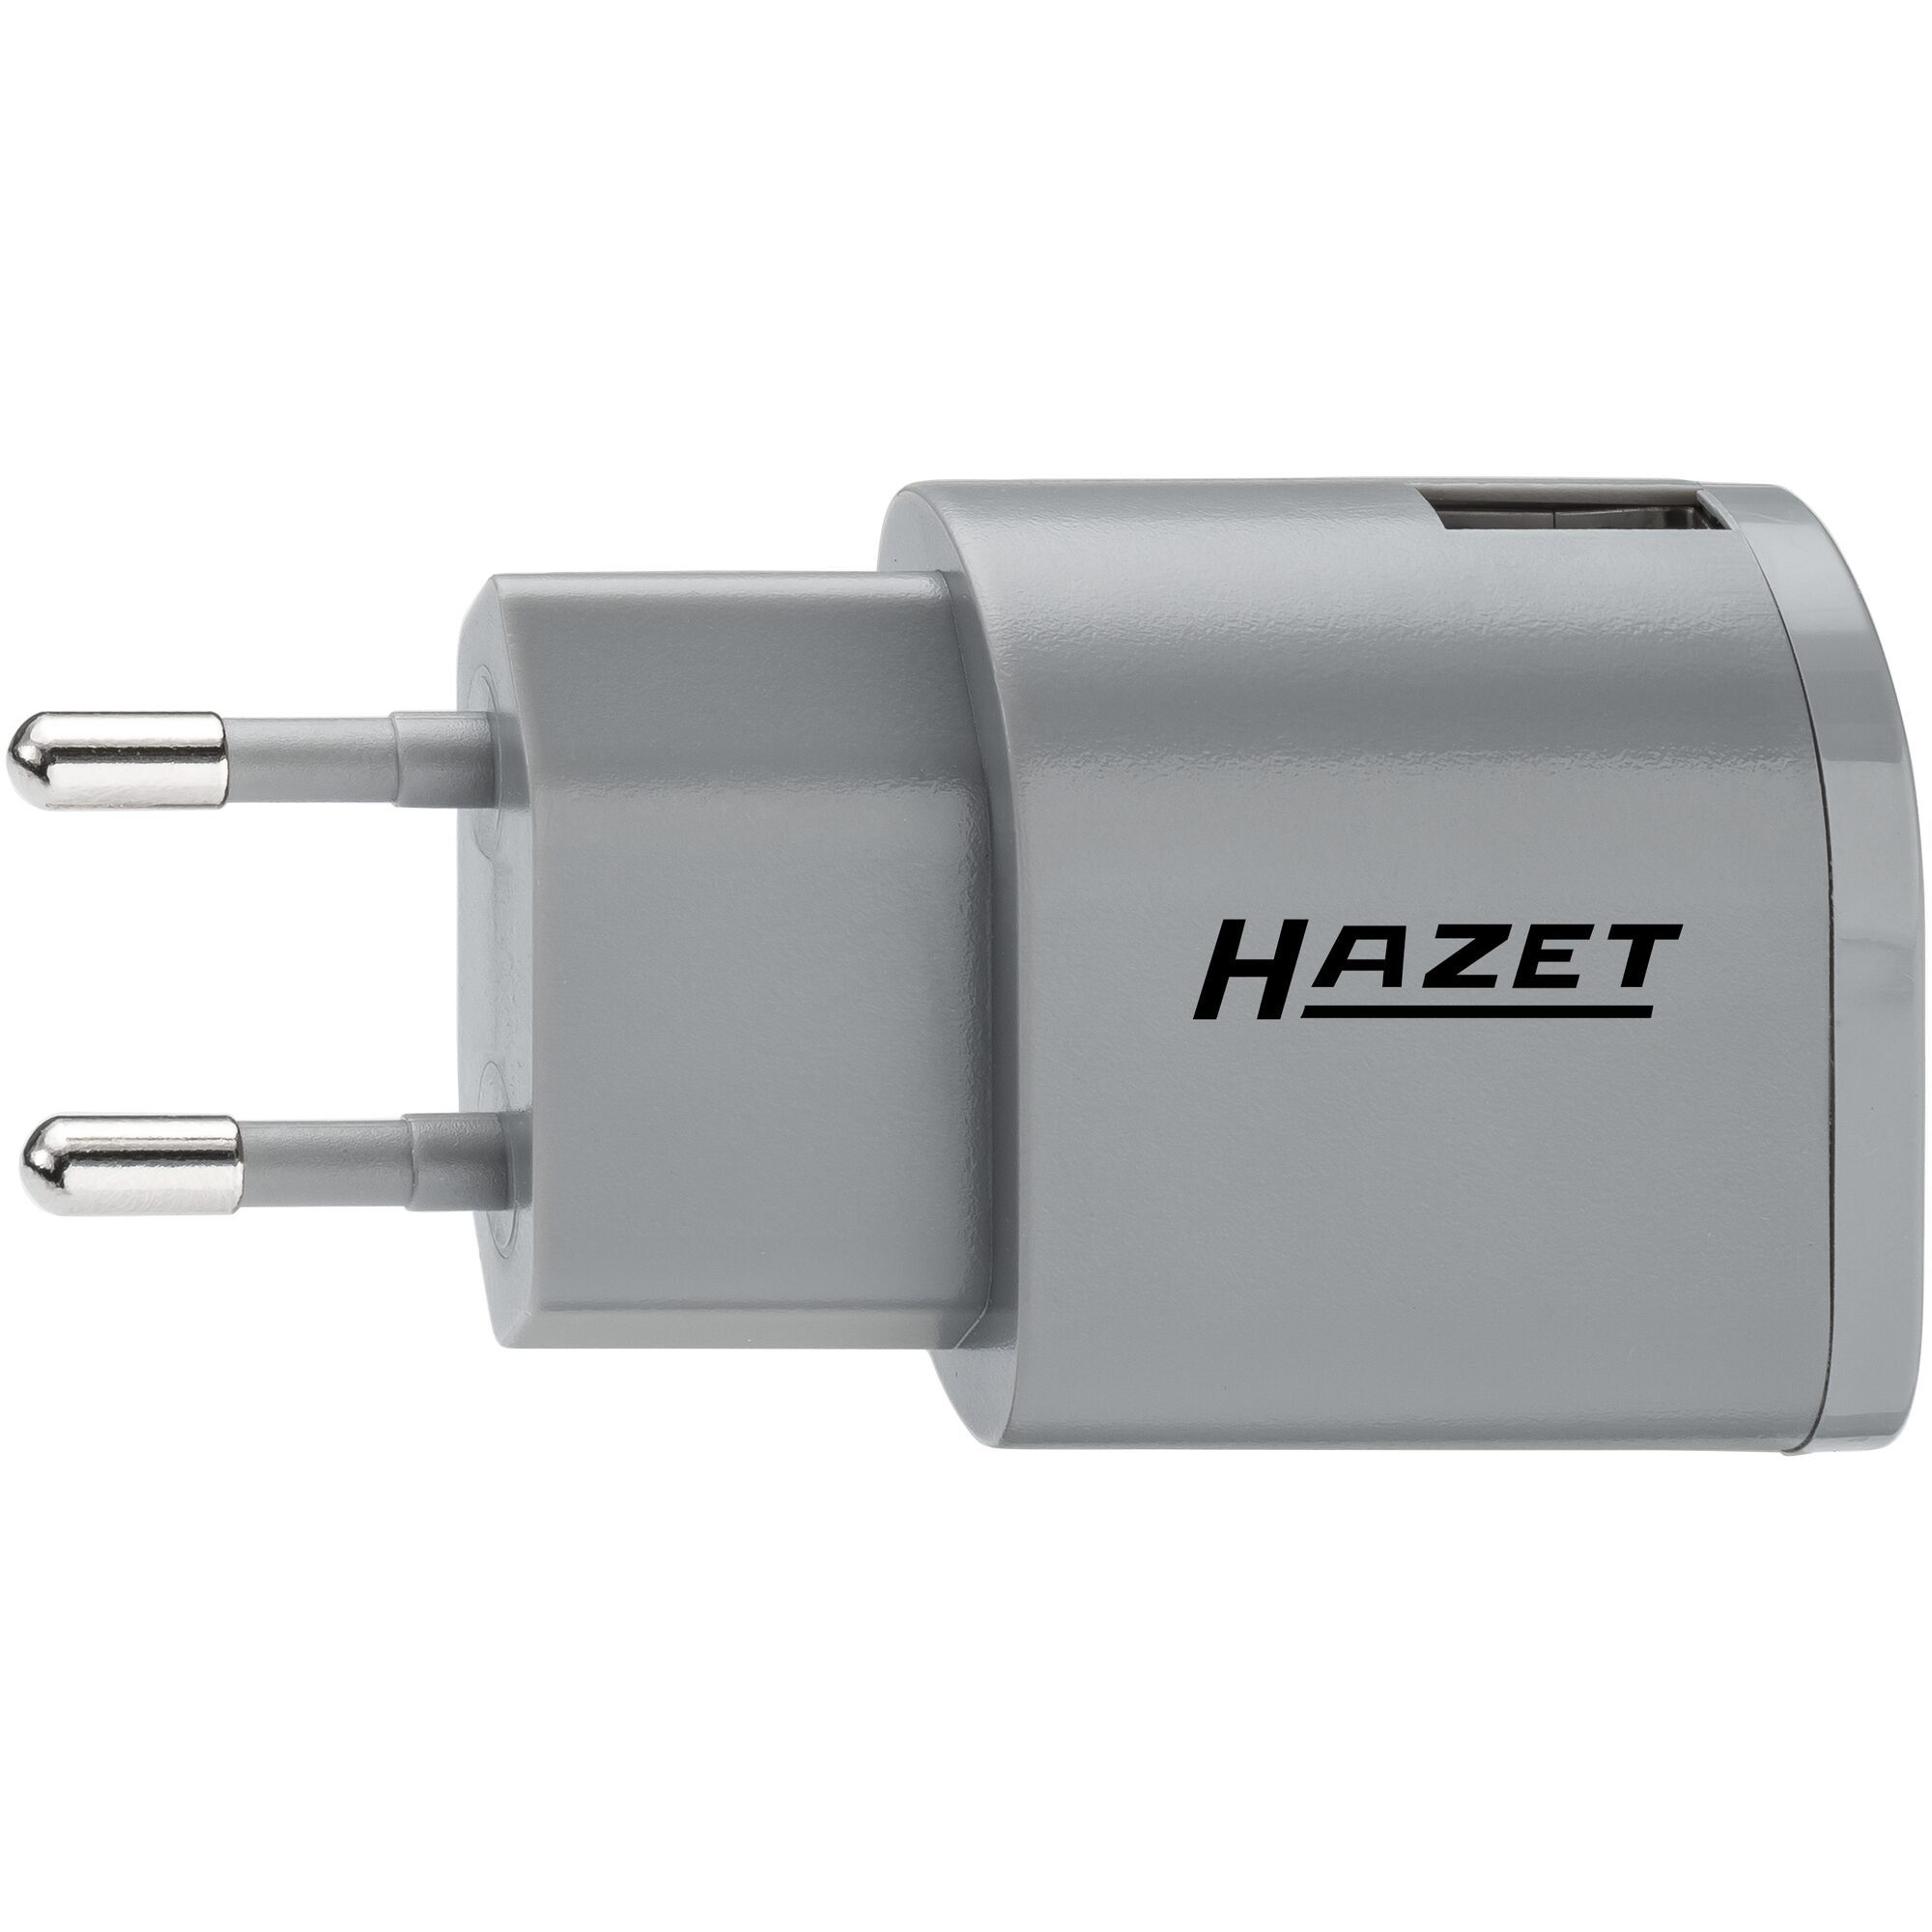 wireless charging HAZET Taschenlampe pad, LED 1979WP-2 Dual HAZET